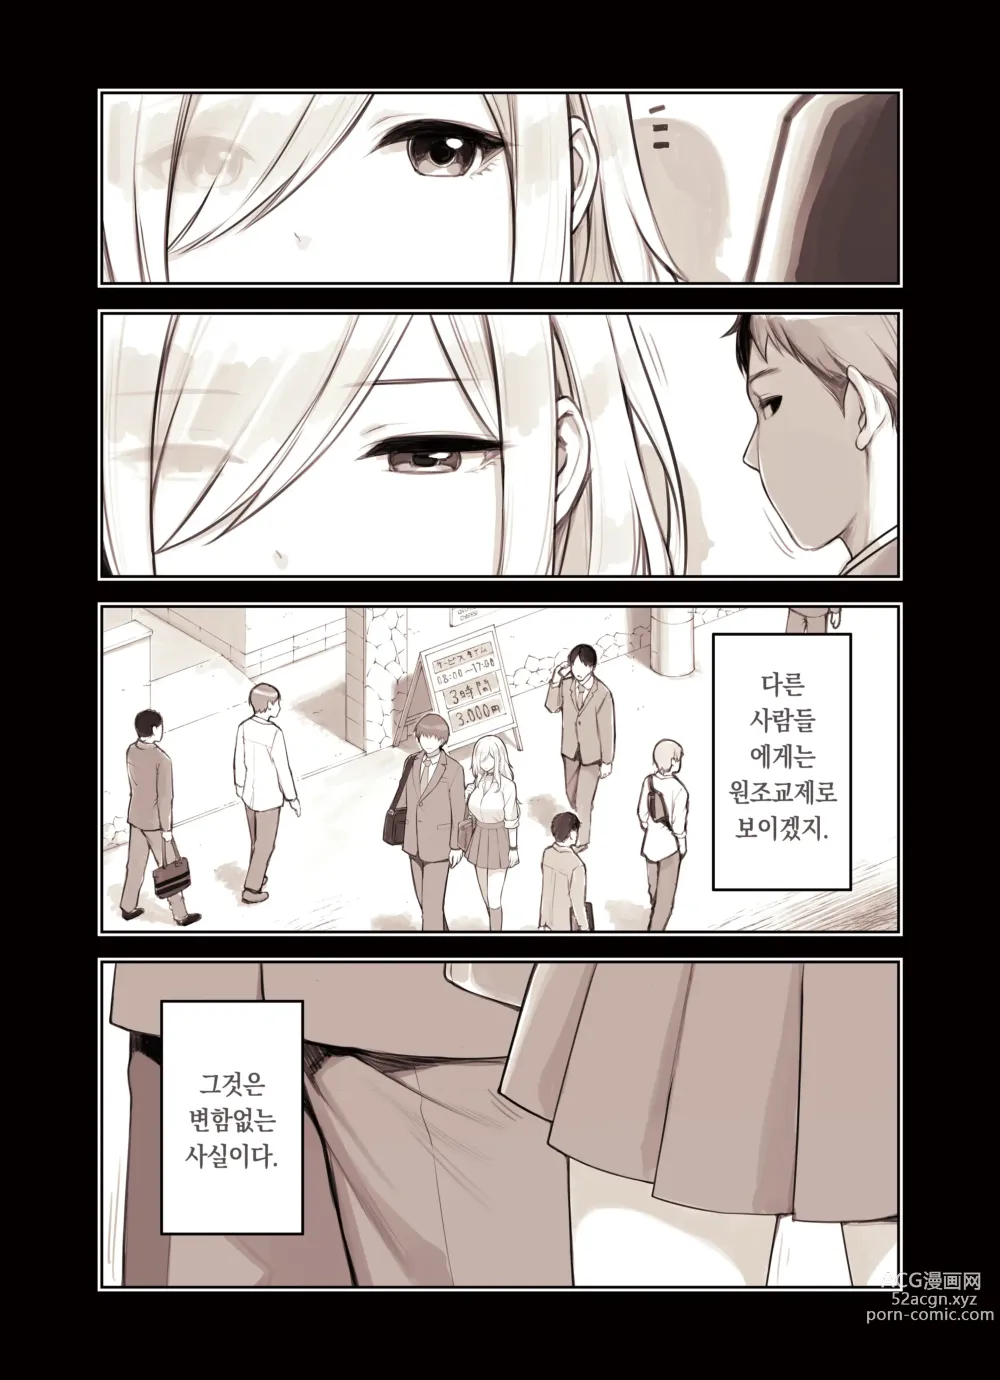 Page 3 of doujinshi 아저씨를 엄청 좋아하는 갸루 2